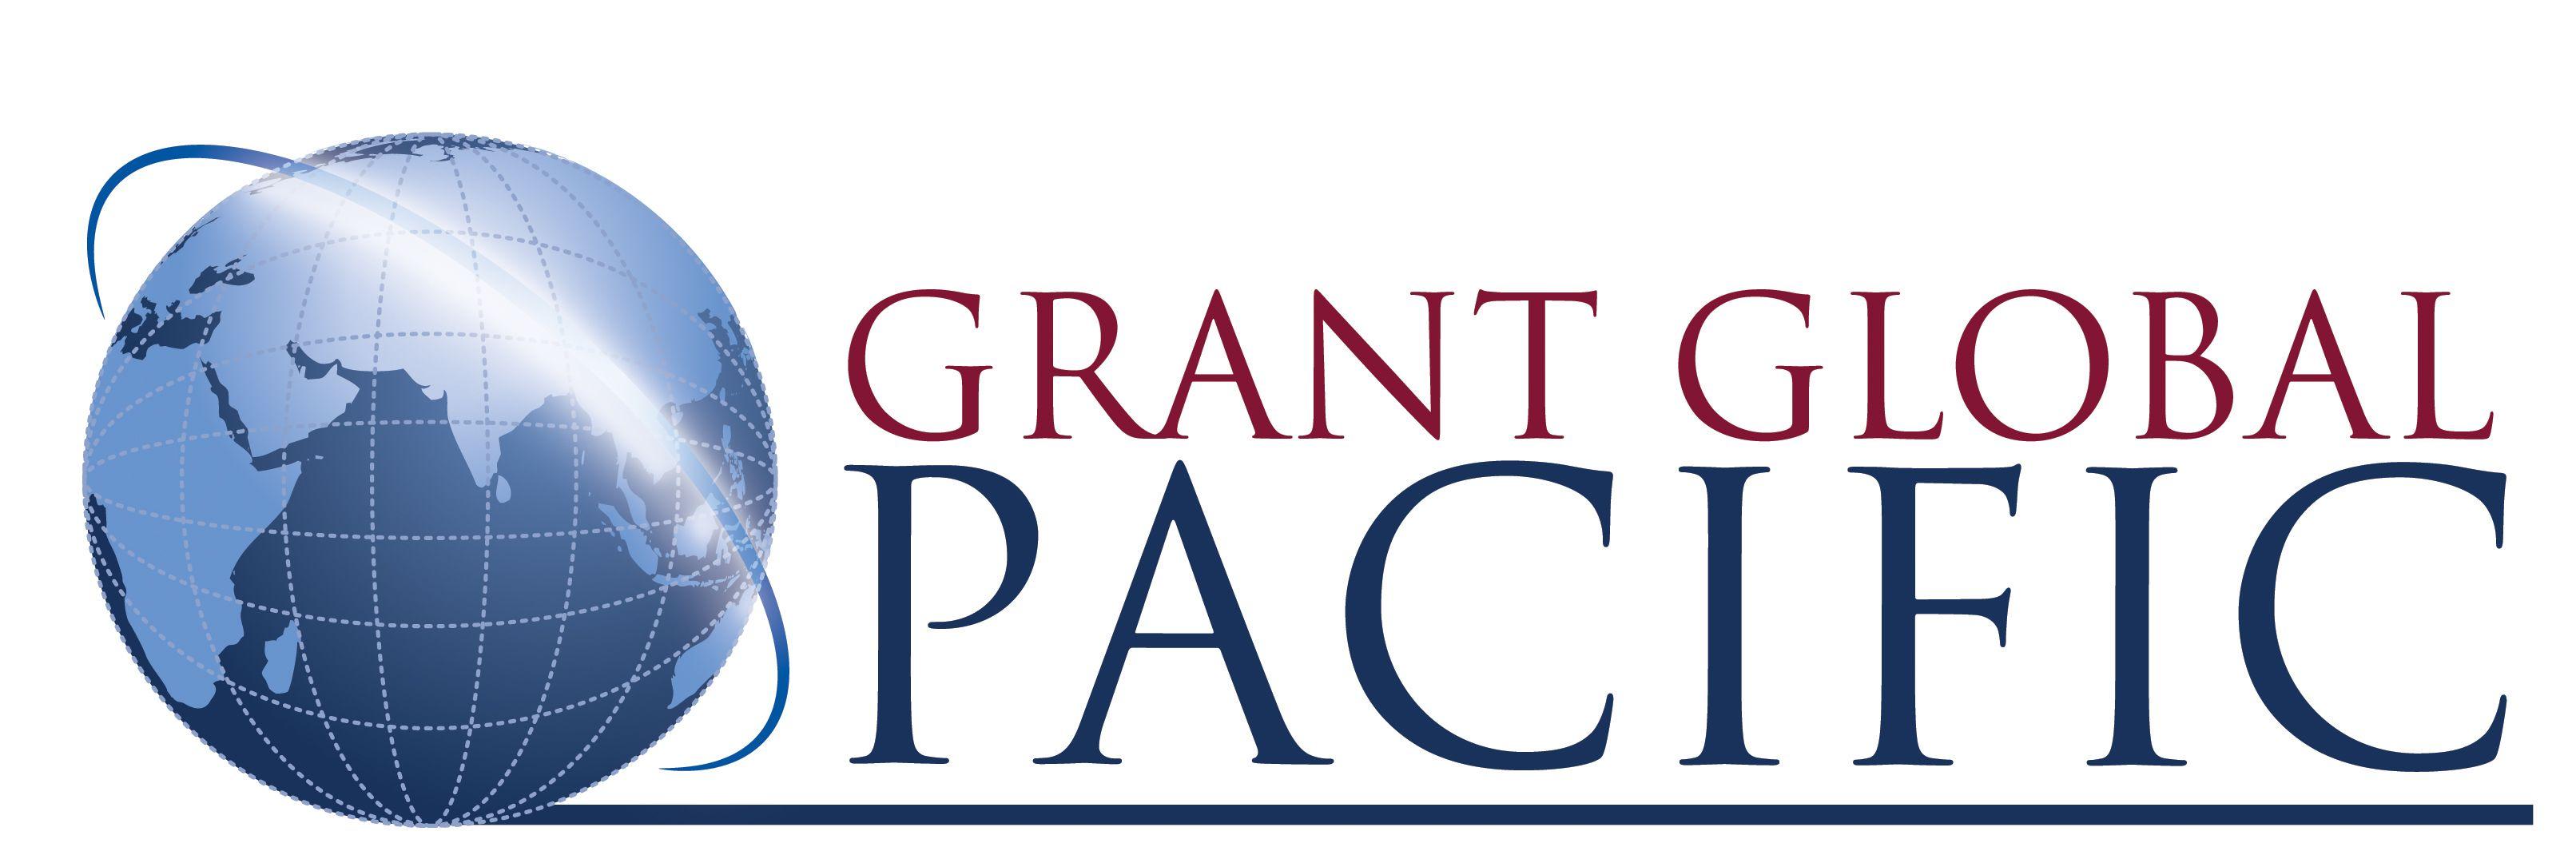 Pacific Globe Logo - Grant Global Pacific